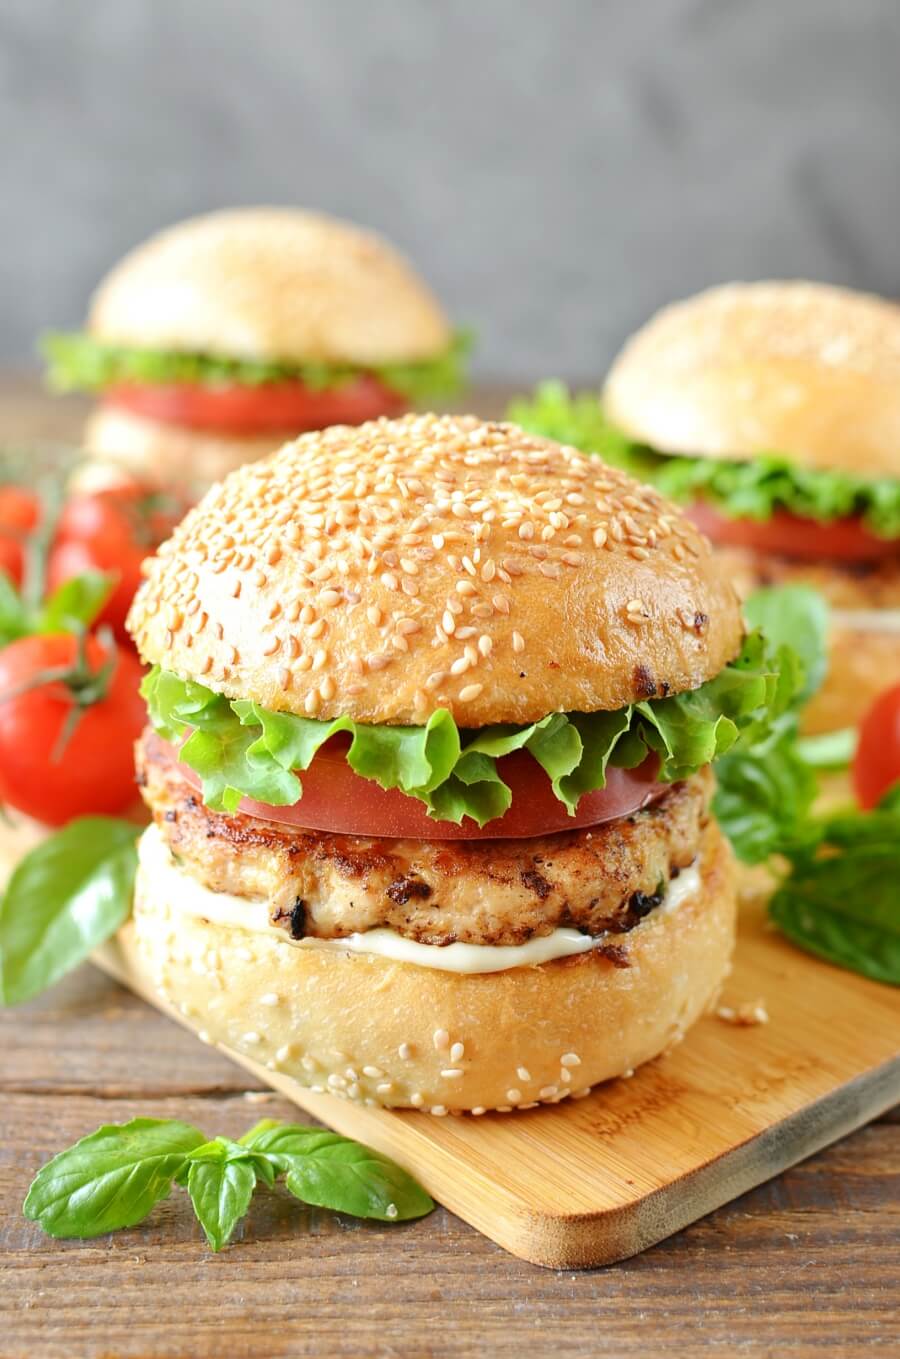 https://cook.me/wp-content/uploads/2019/07/Best-Ever-Turkey-Burger-Recipe-How-To-Make-Best-Ever-Turkey-Burger-Delicious-Best-Ever-Turkey-Burger-12.jpg